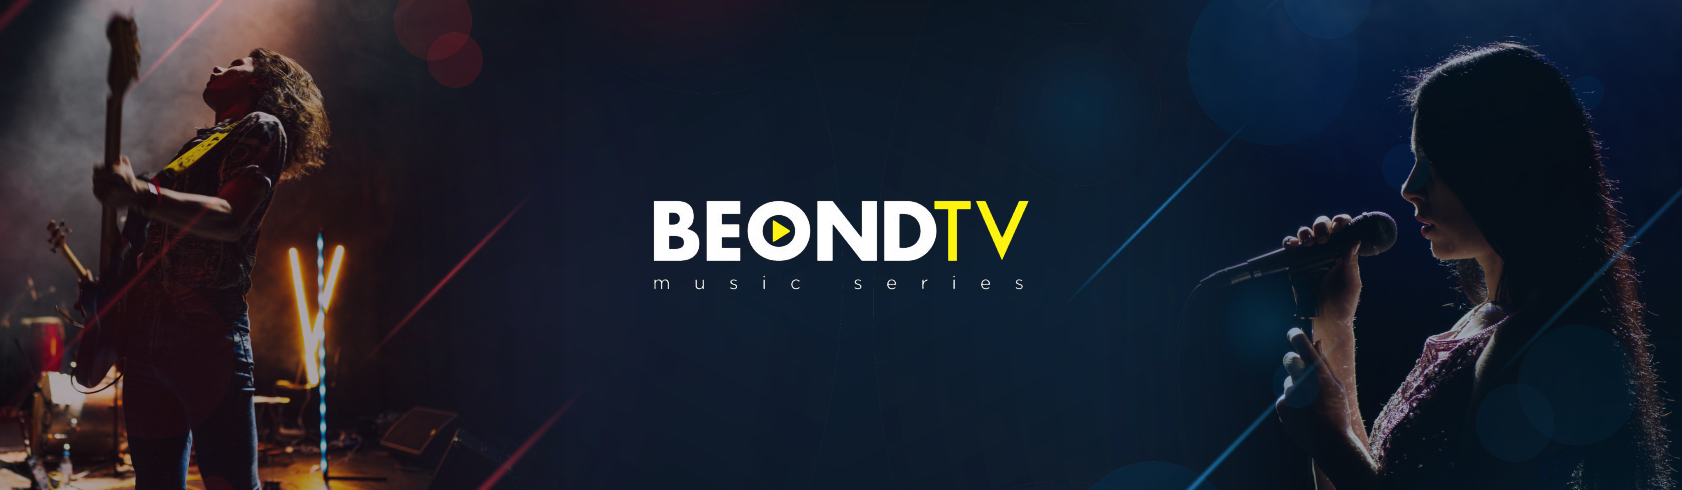 BEONDTV Music Series